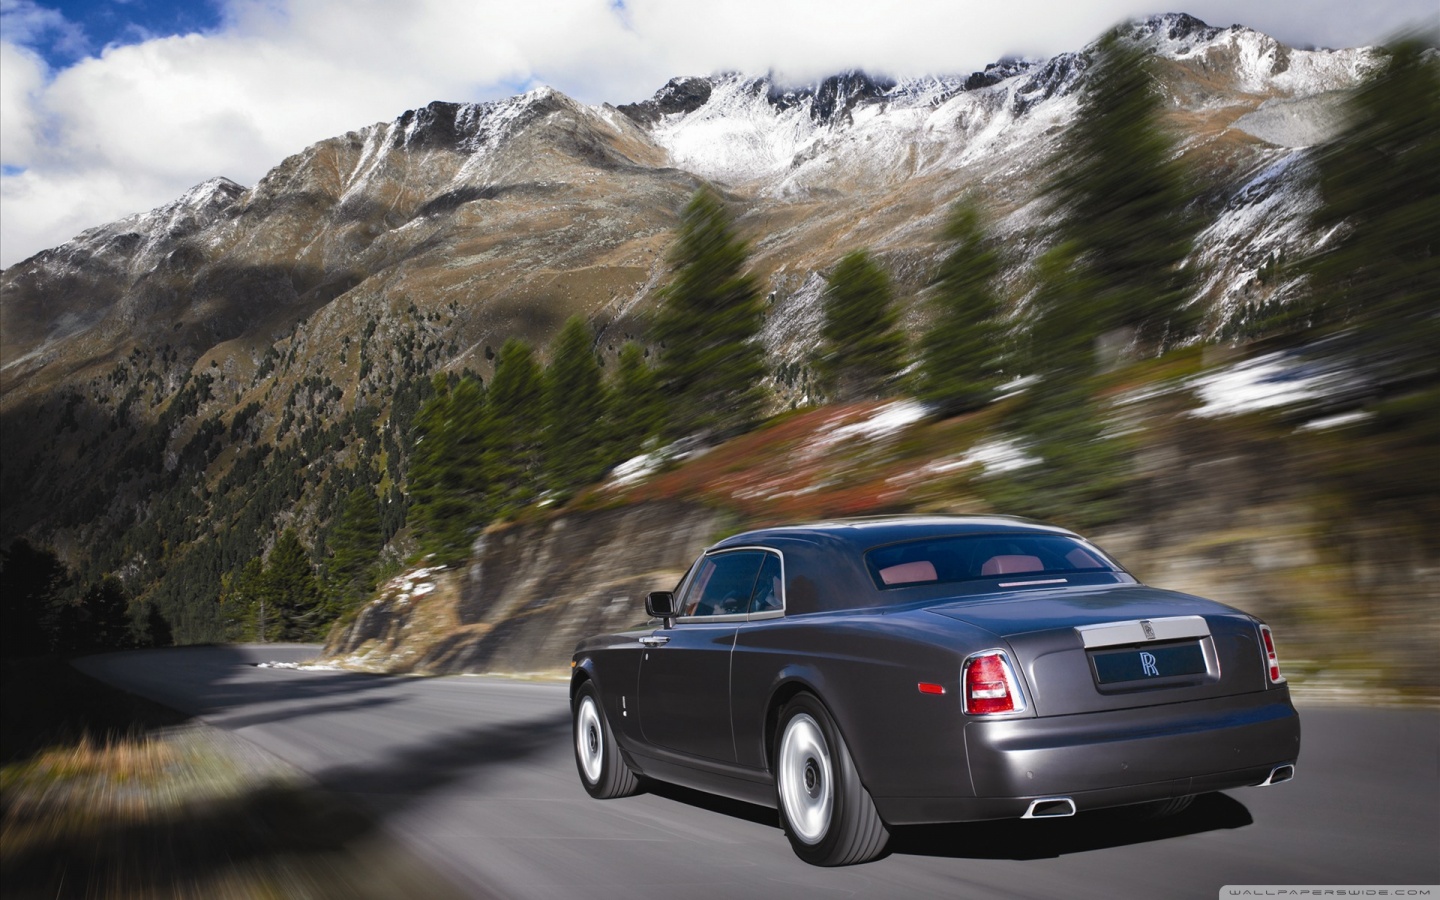 Download Rolls Royce Super Car 3 UltraHD Wallpaper - Wallpapers Printed